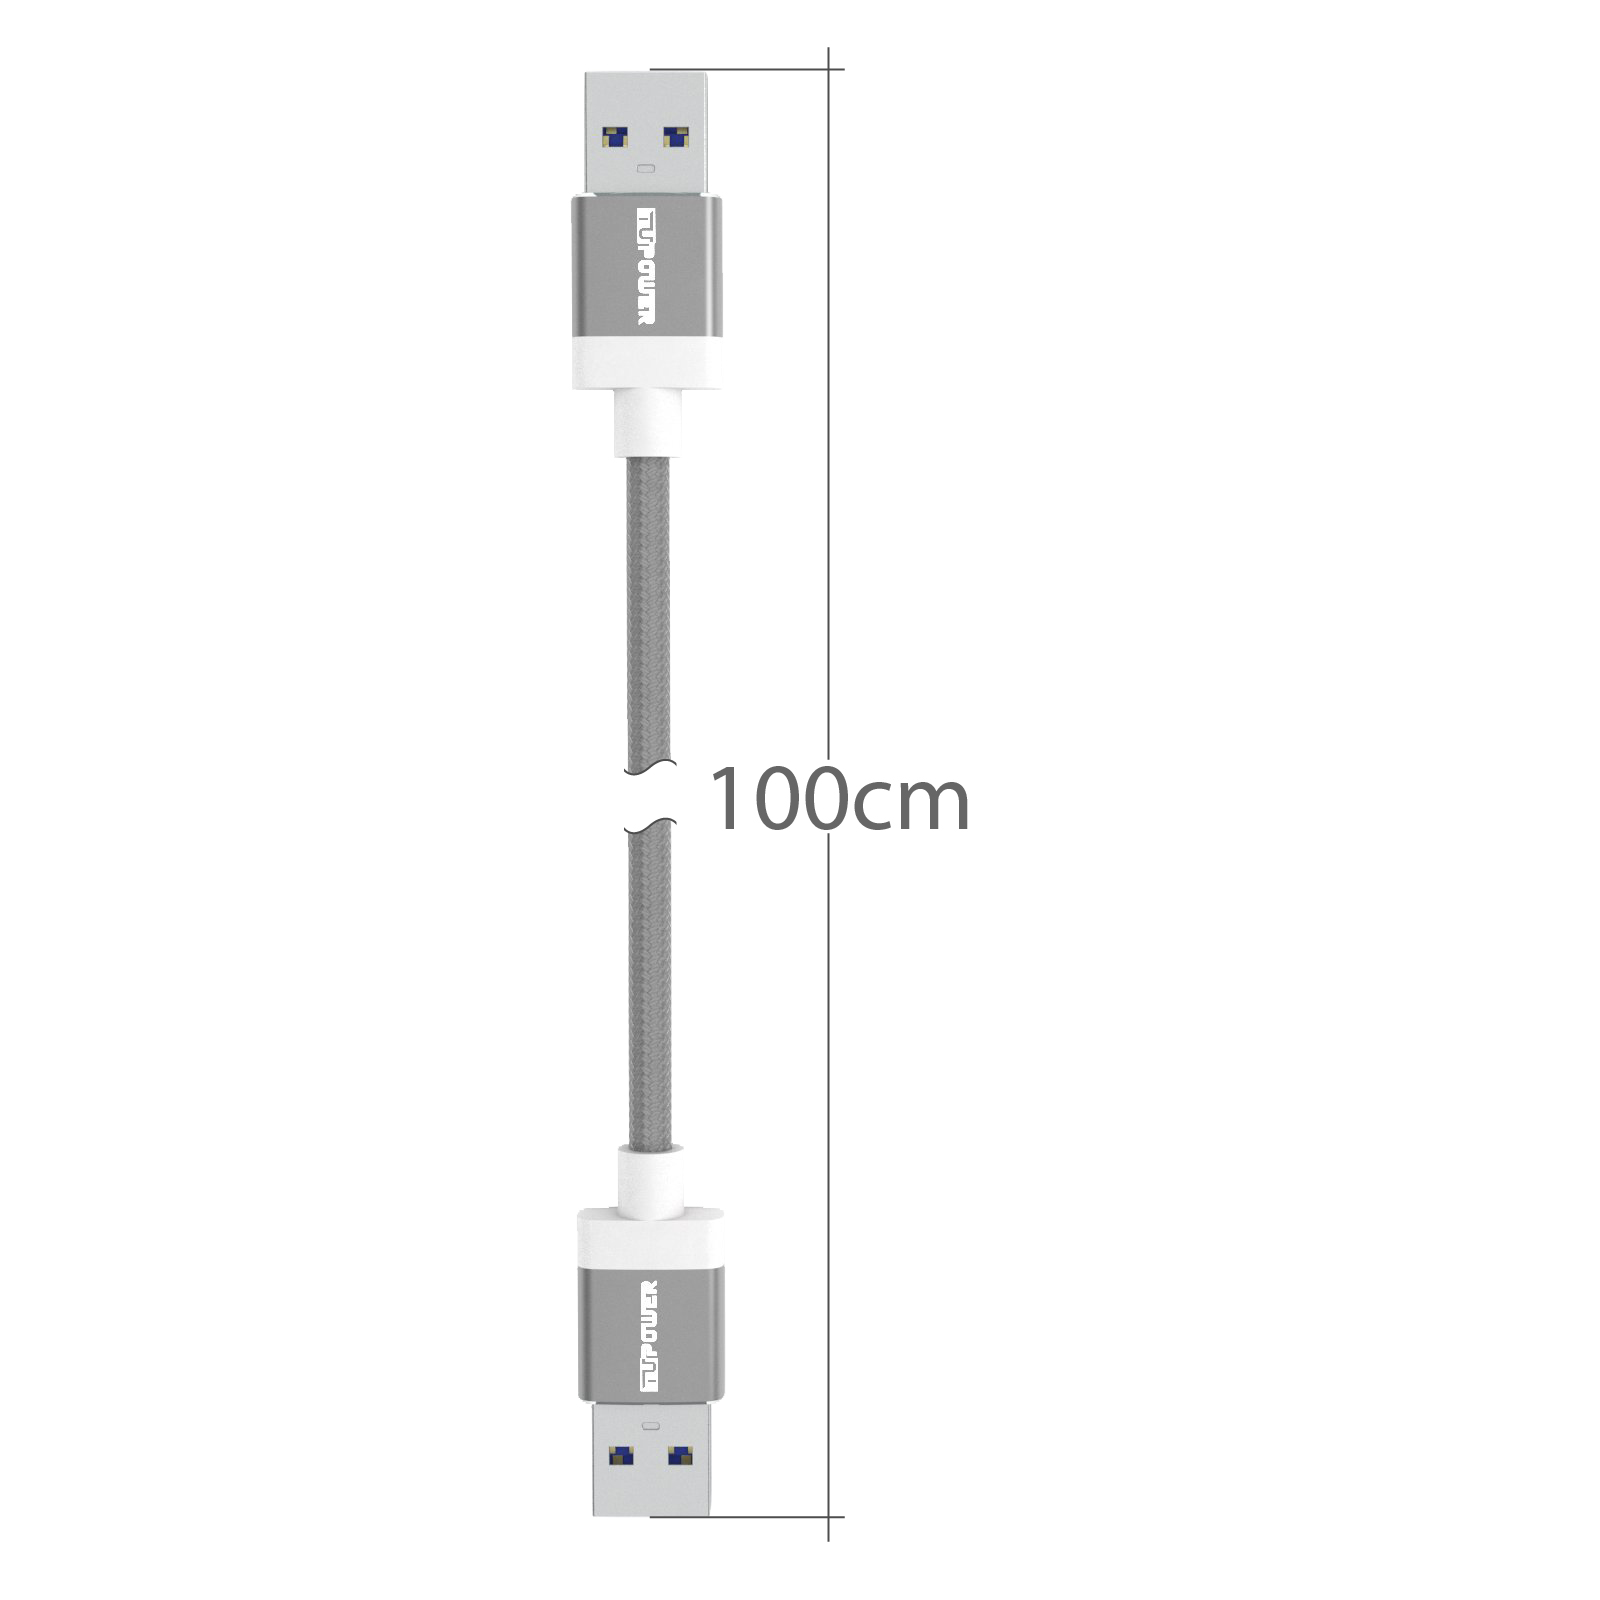 USB K56 3.0 TUPOWER Verbindungskabel Kabel USB 1m Verbindung